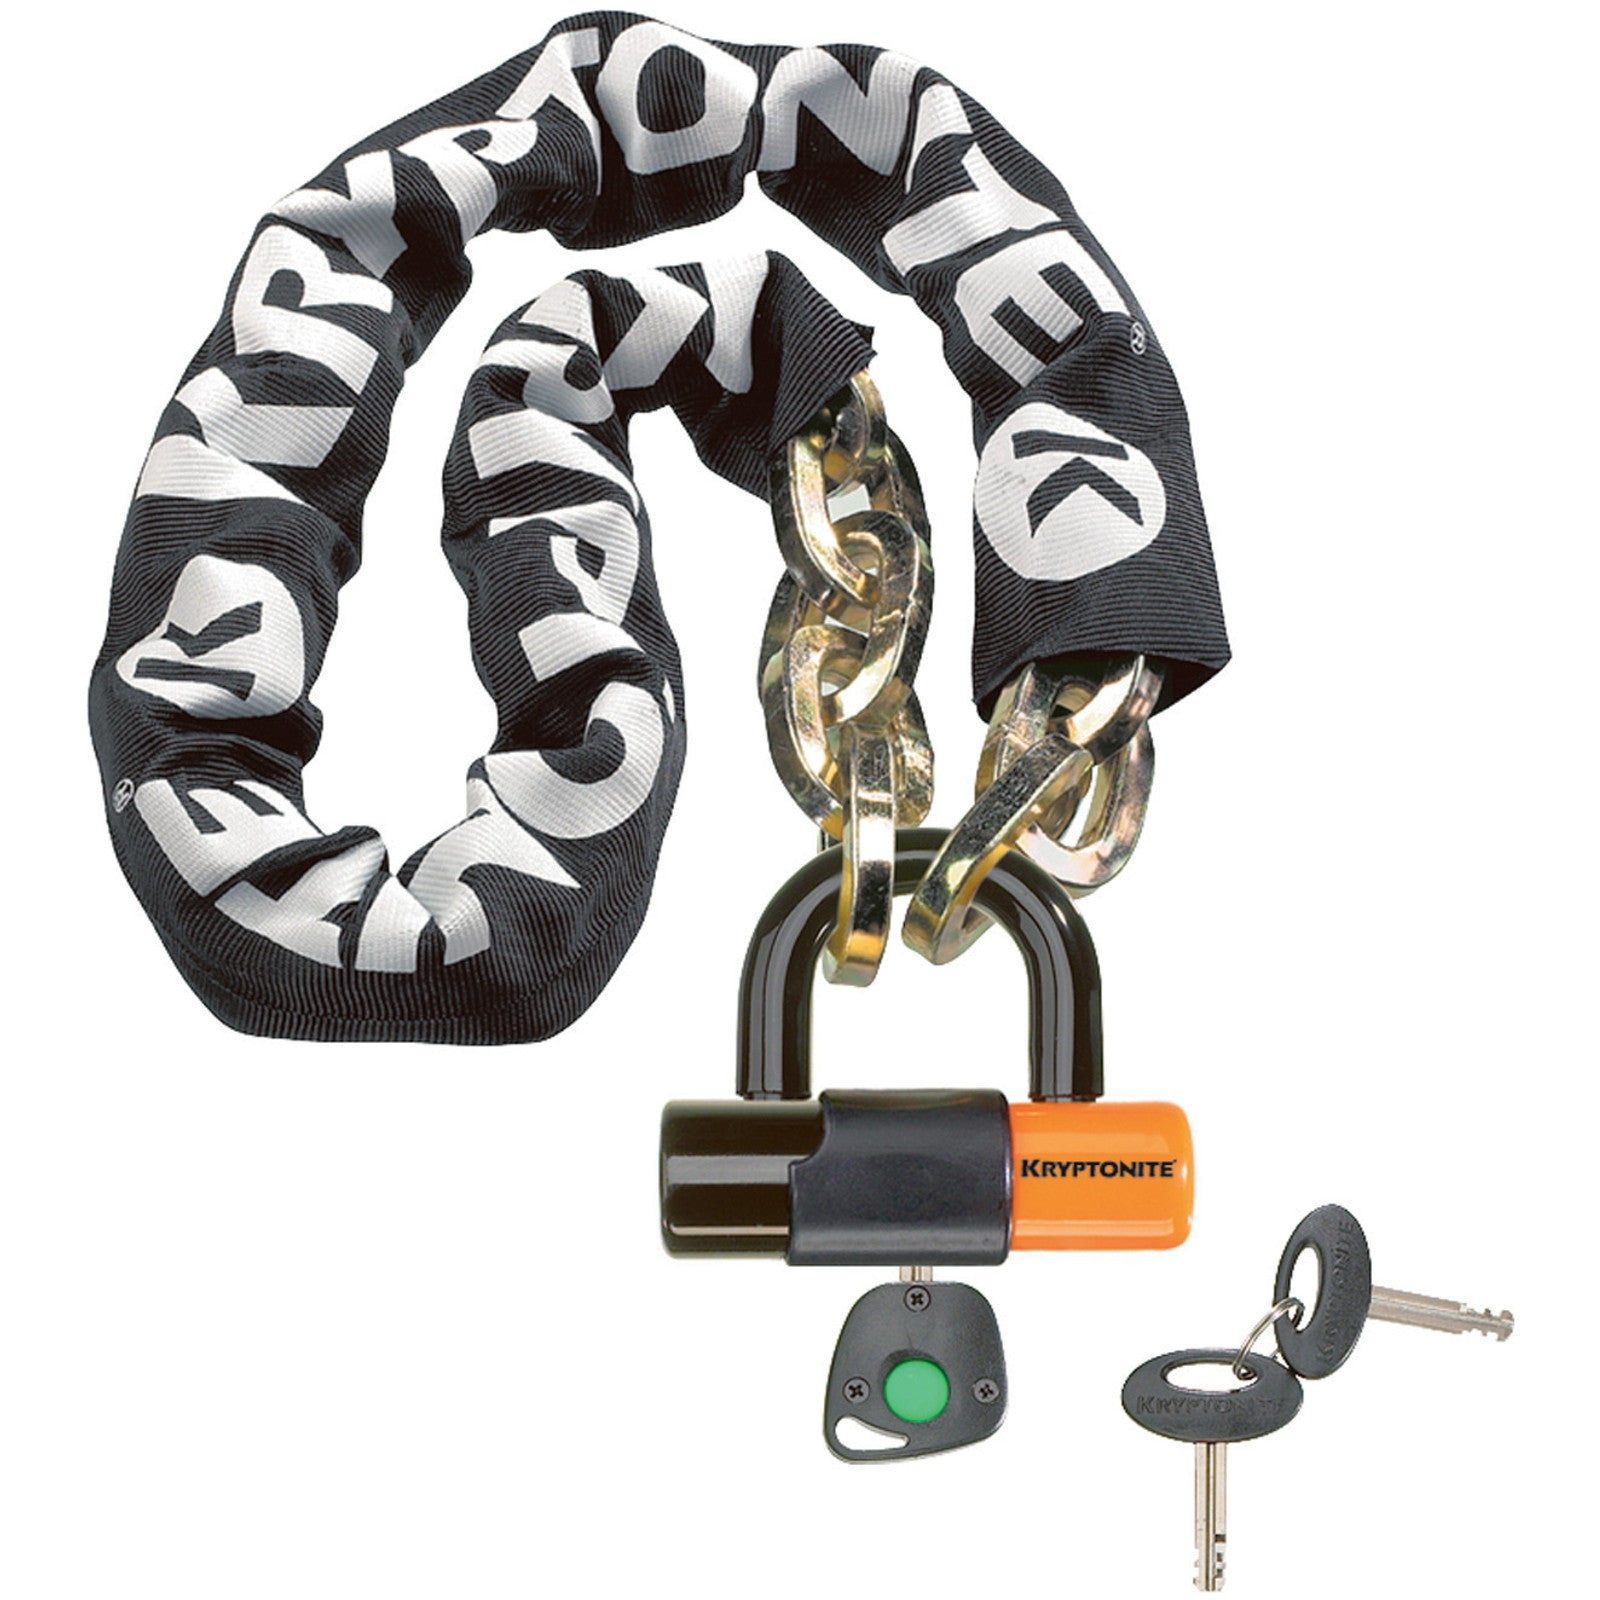 Kryptonite New York 1210 12mm 100cm Bike Chain Lock With EVS4 Shackle